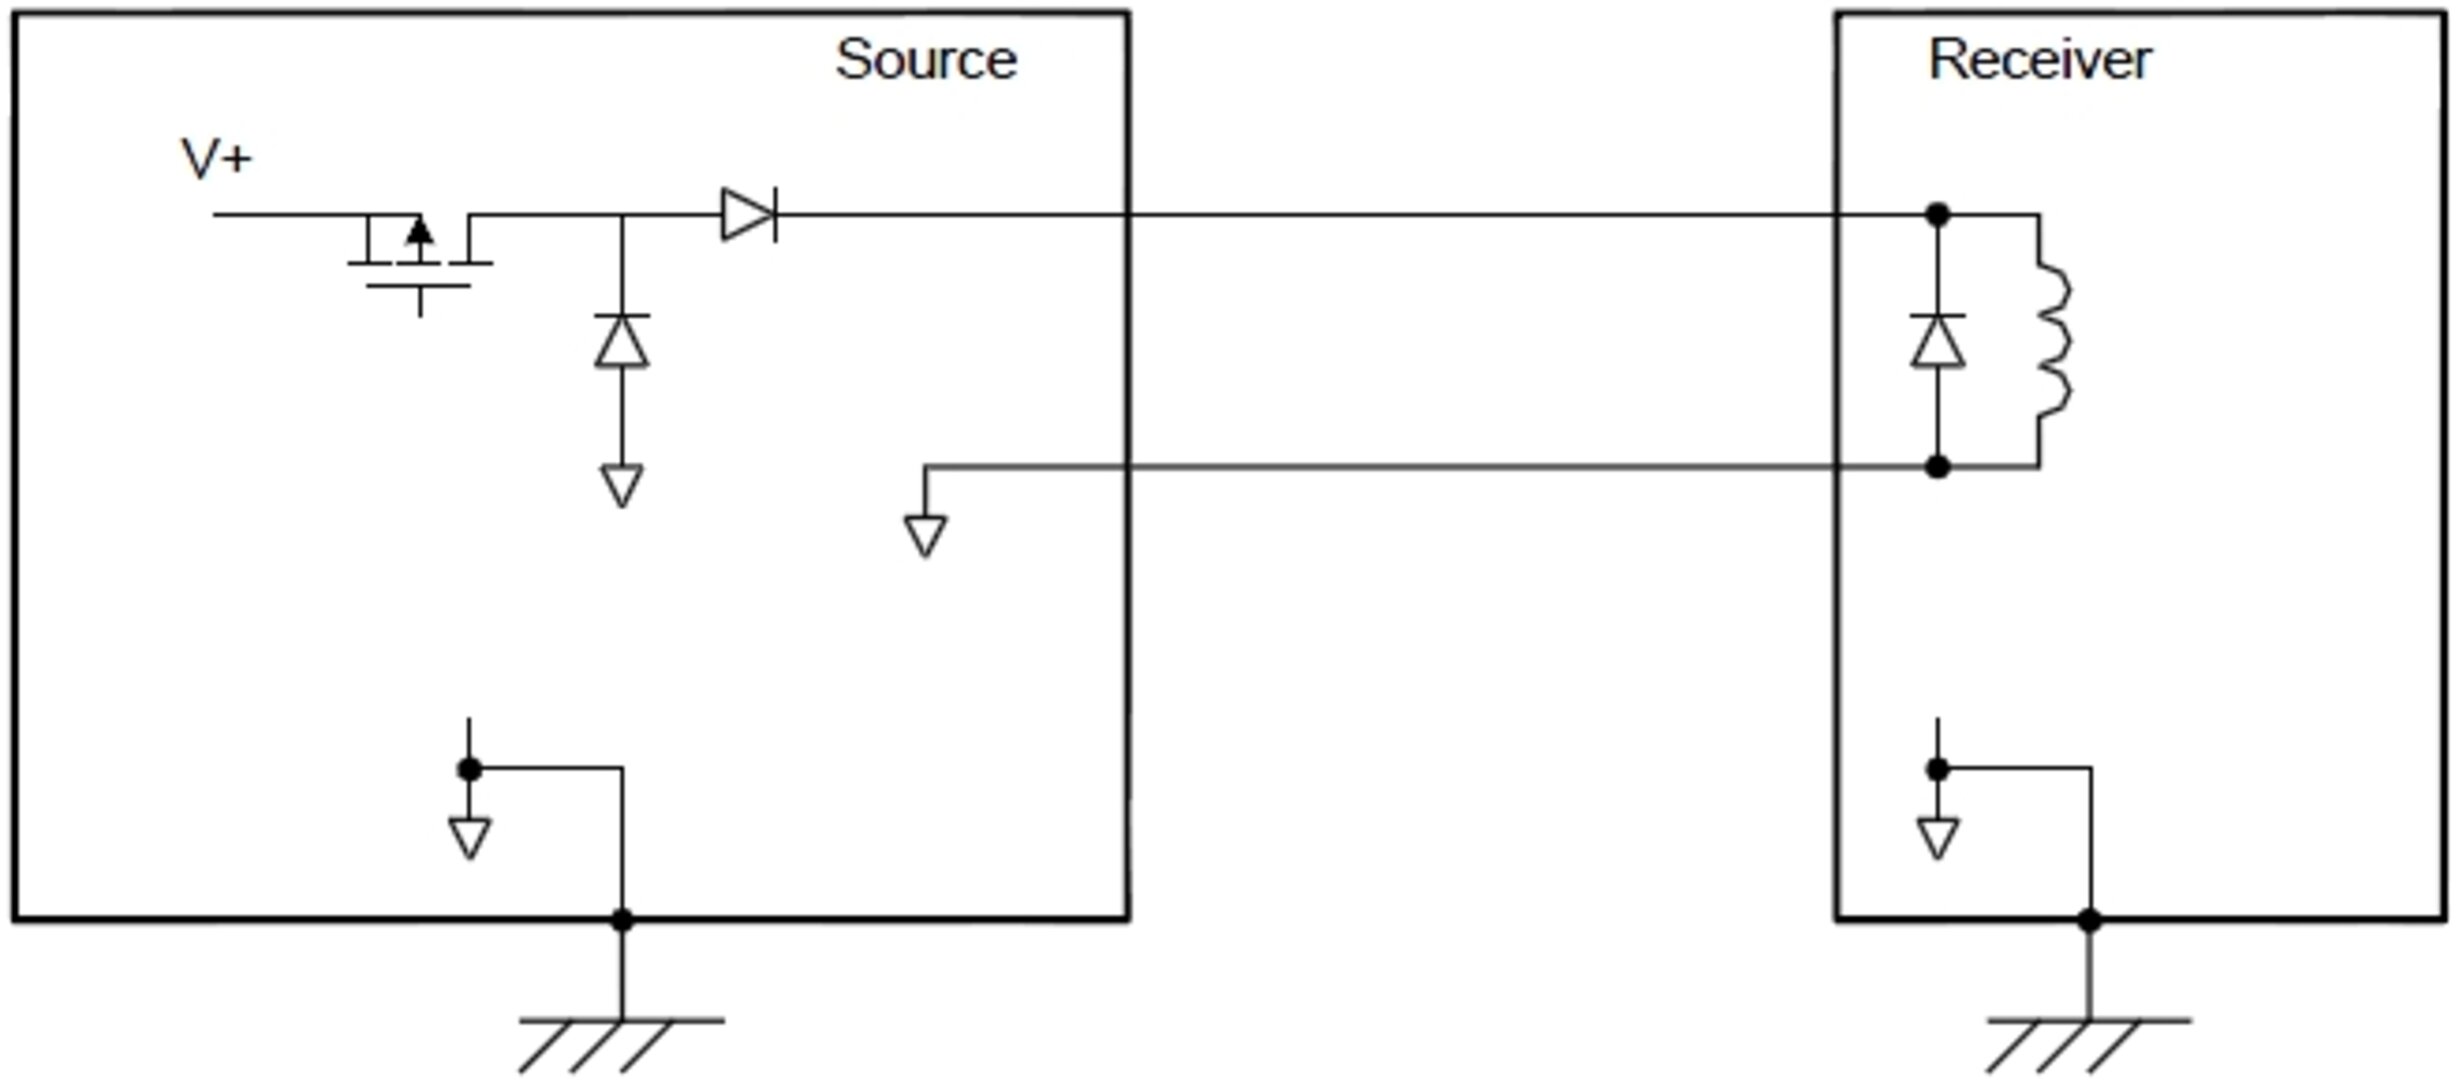 Figure 4. HPC interface arrangement